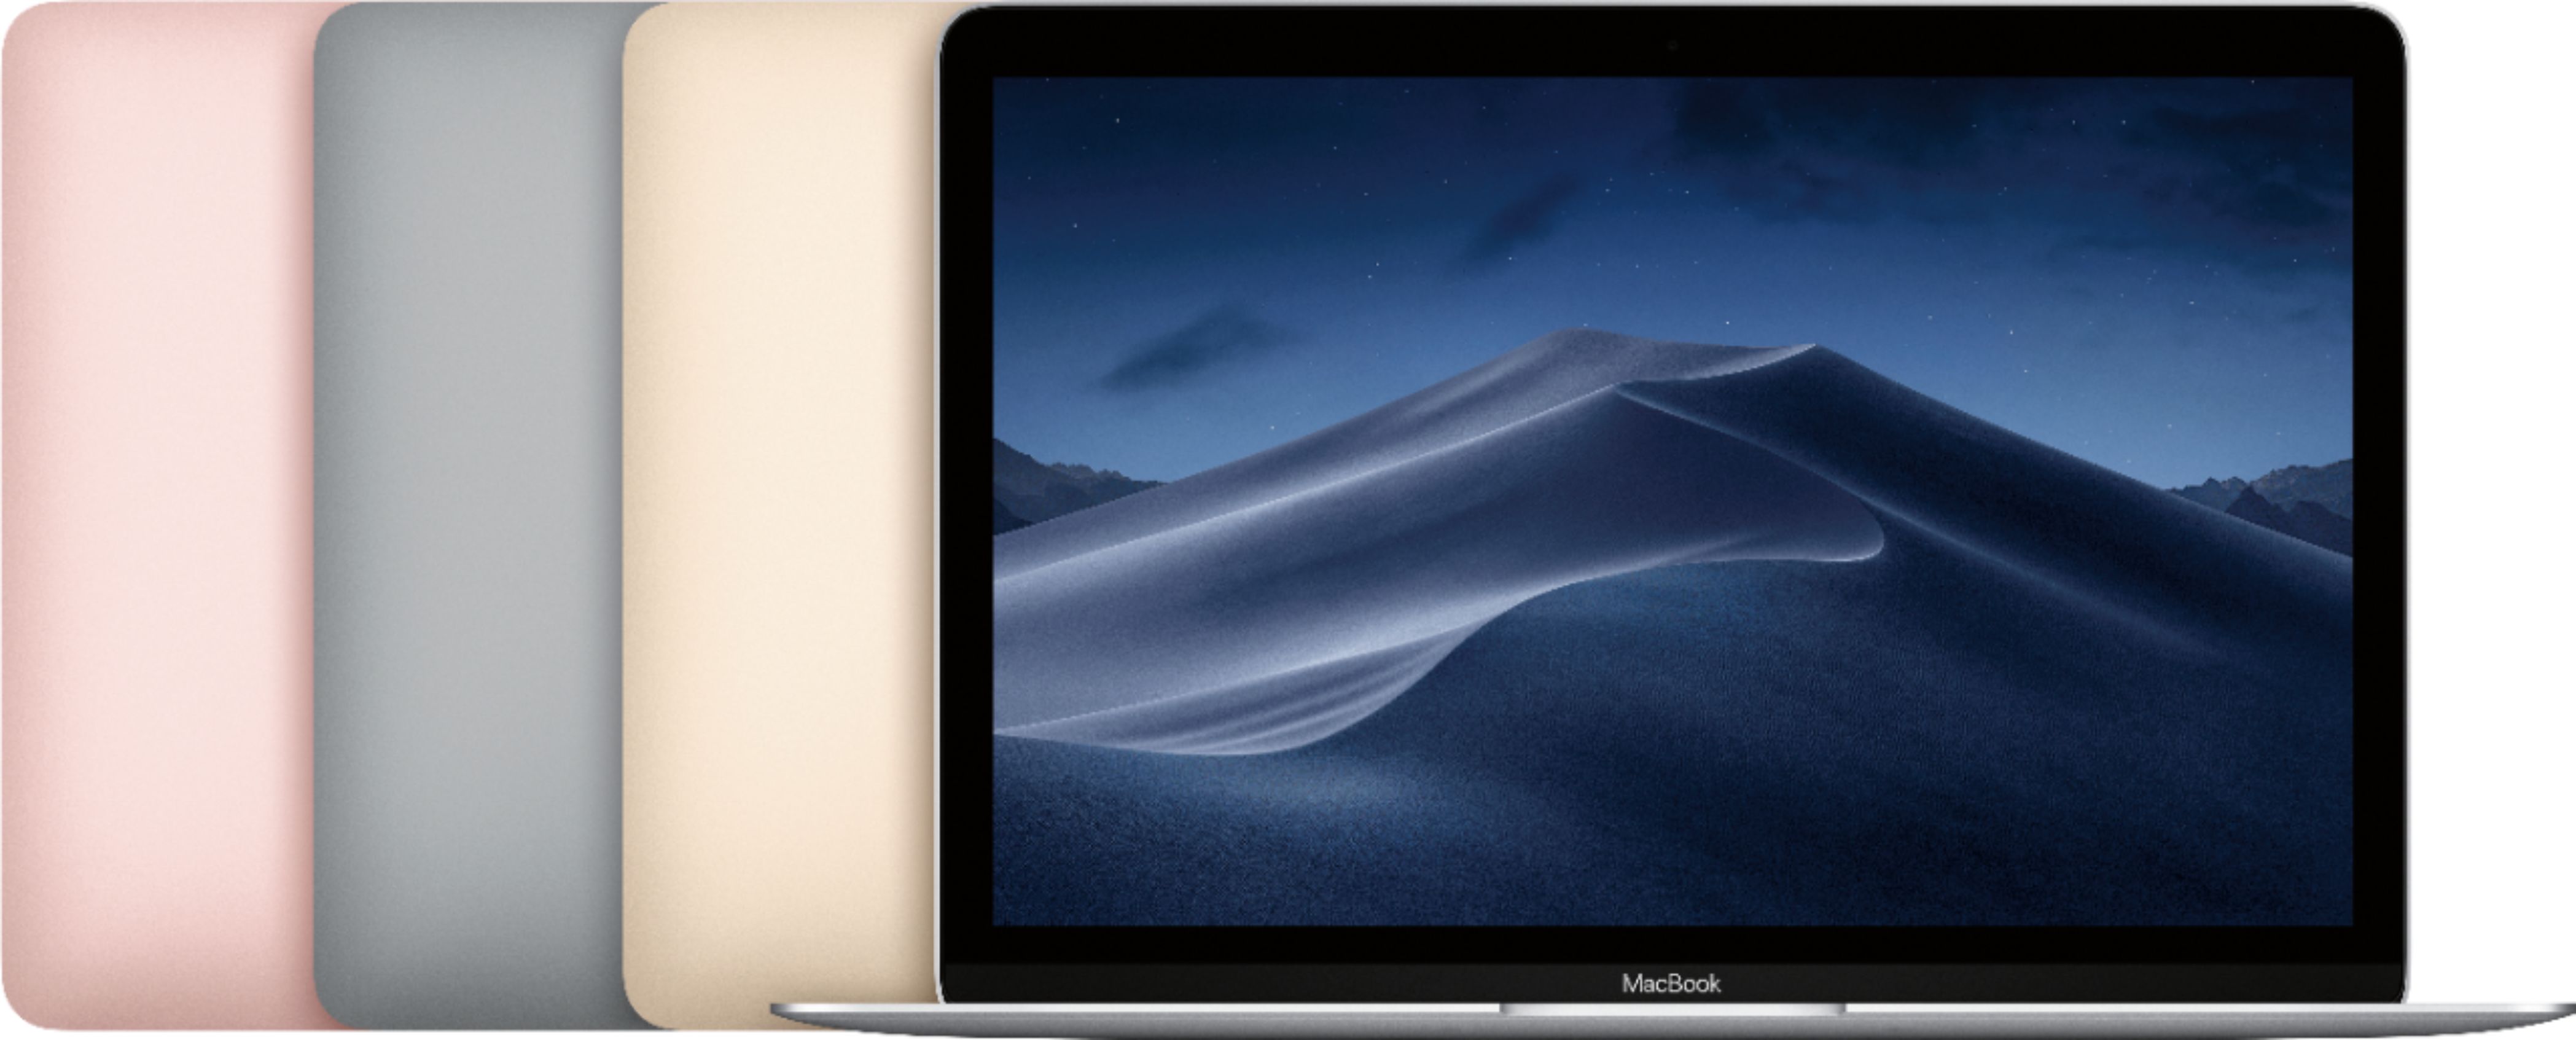 Ordinateur Portable Apple MacBook 12'' 256Go SSD 8Go RAM Intel